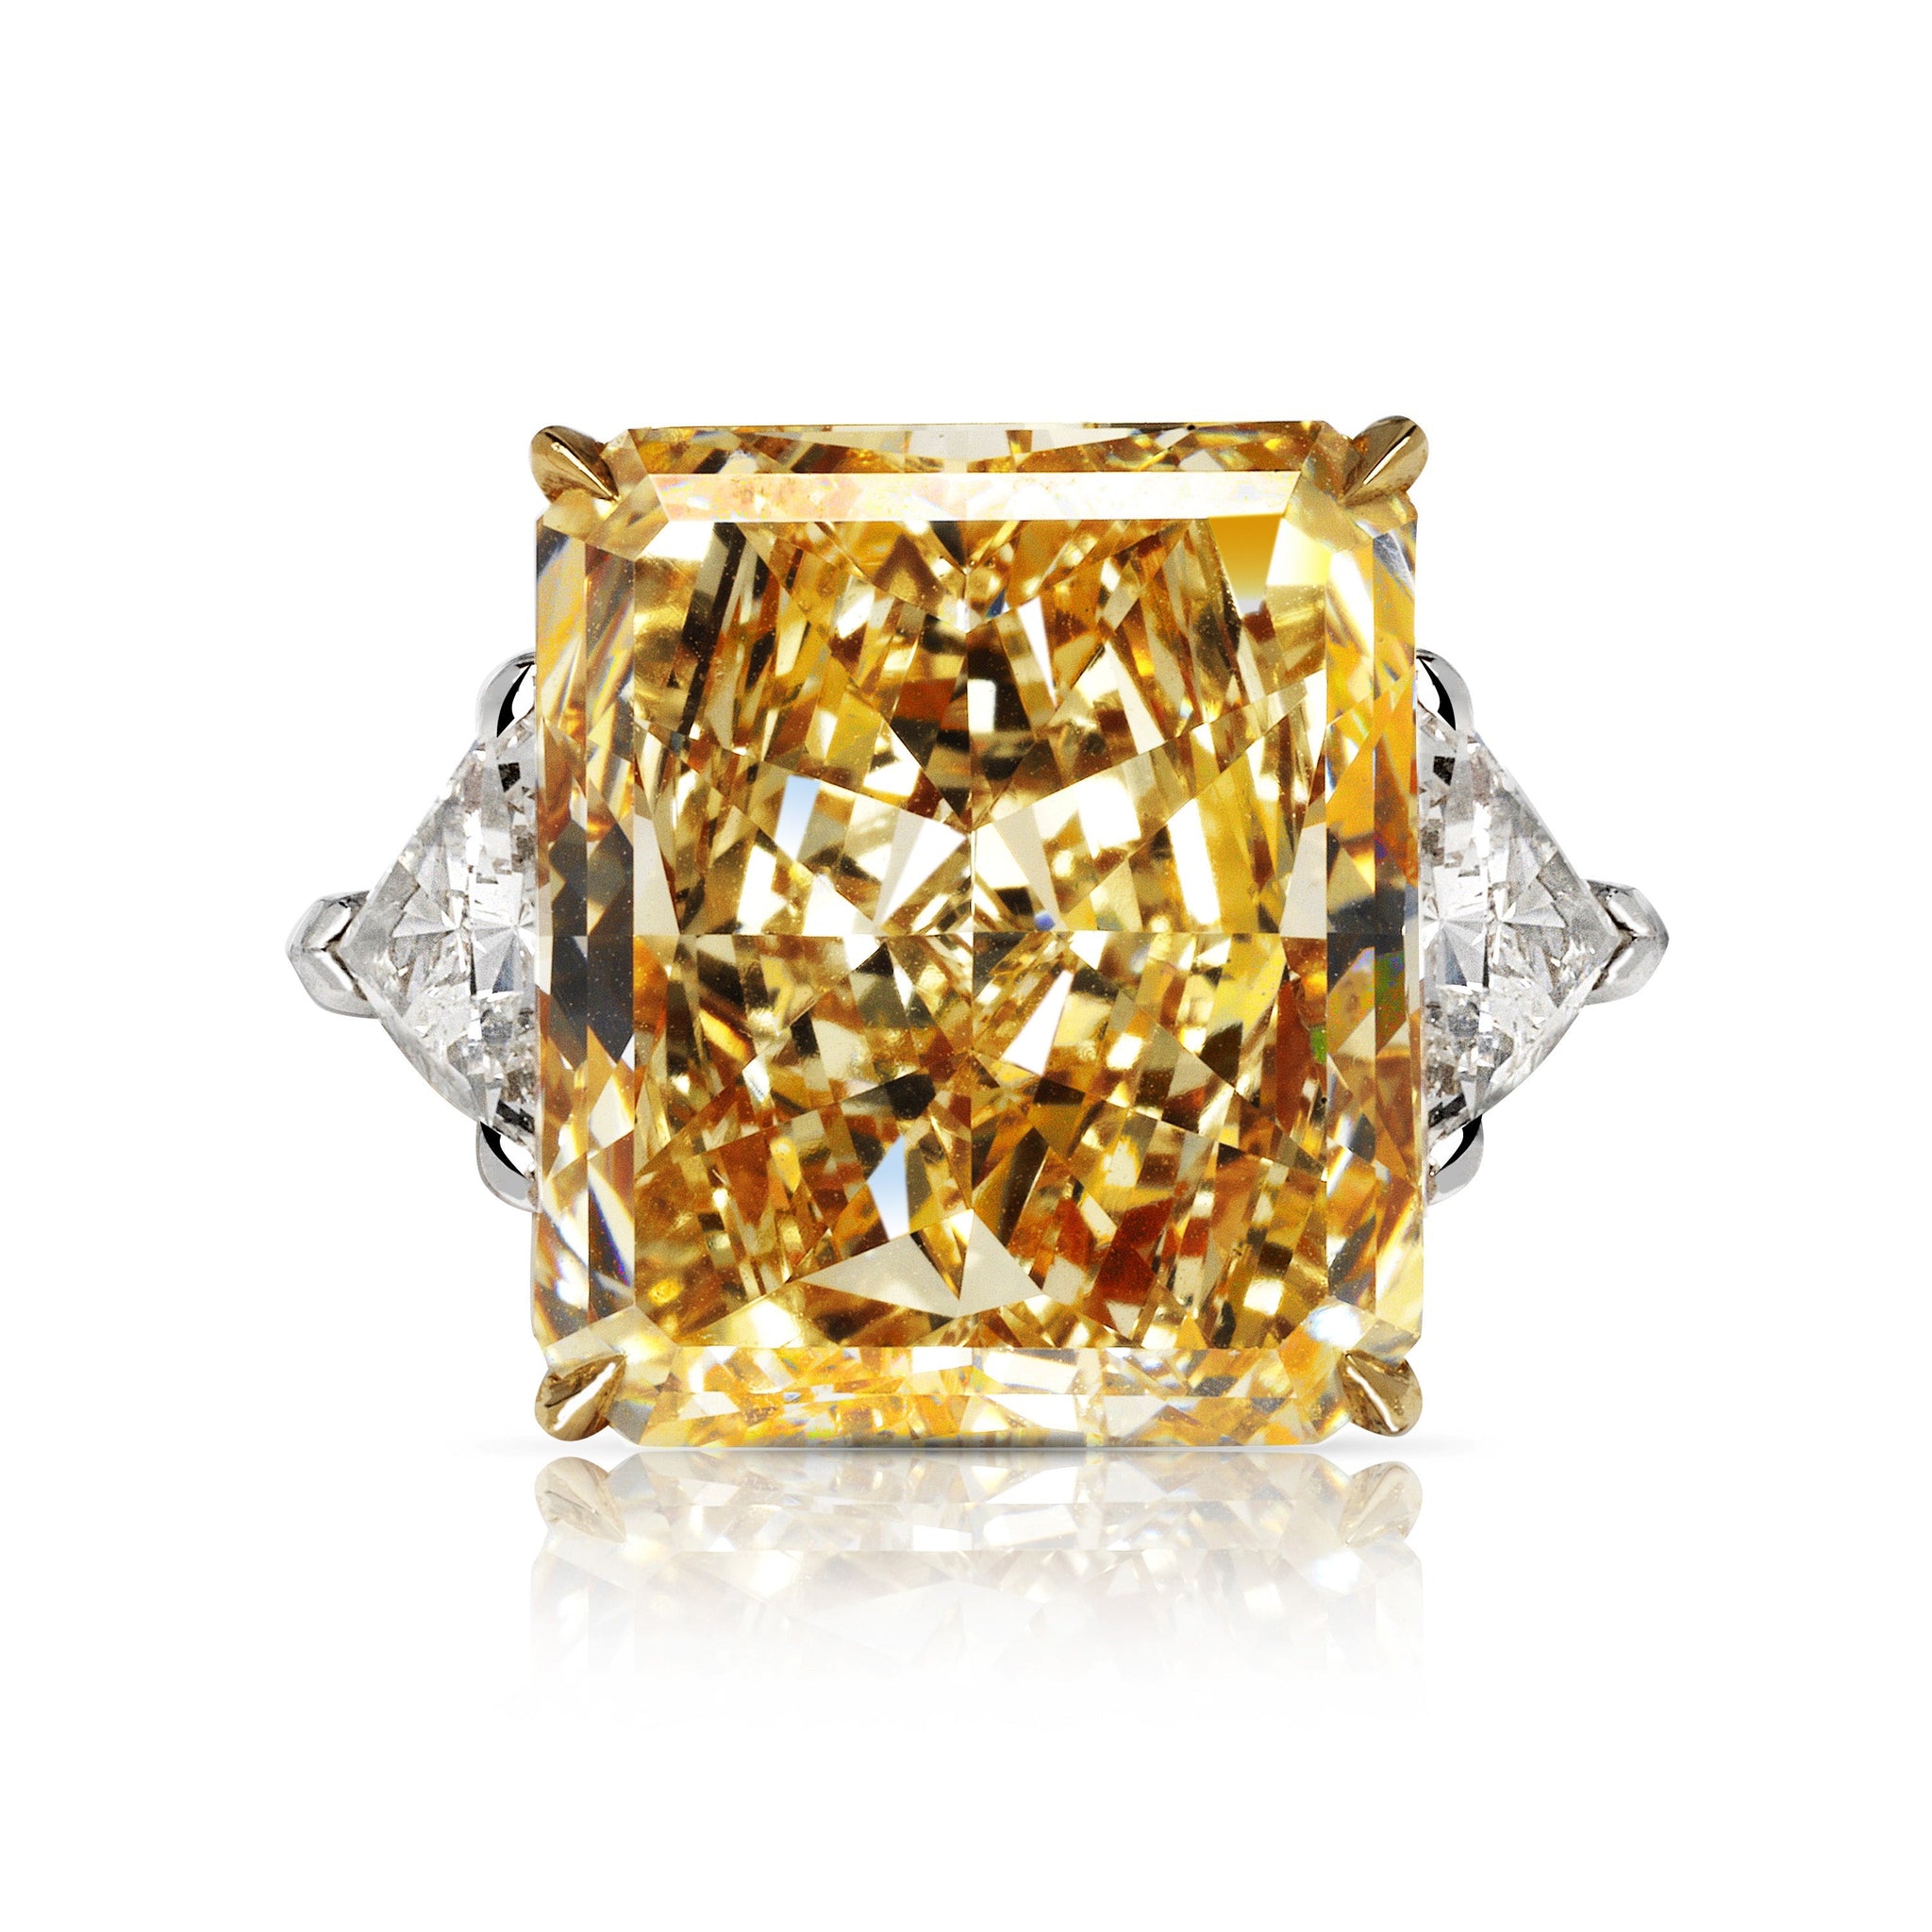 The Elegance of Verona: A Radiant Cut Fancy Yellow Diamond Ring by Mike Nekta